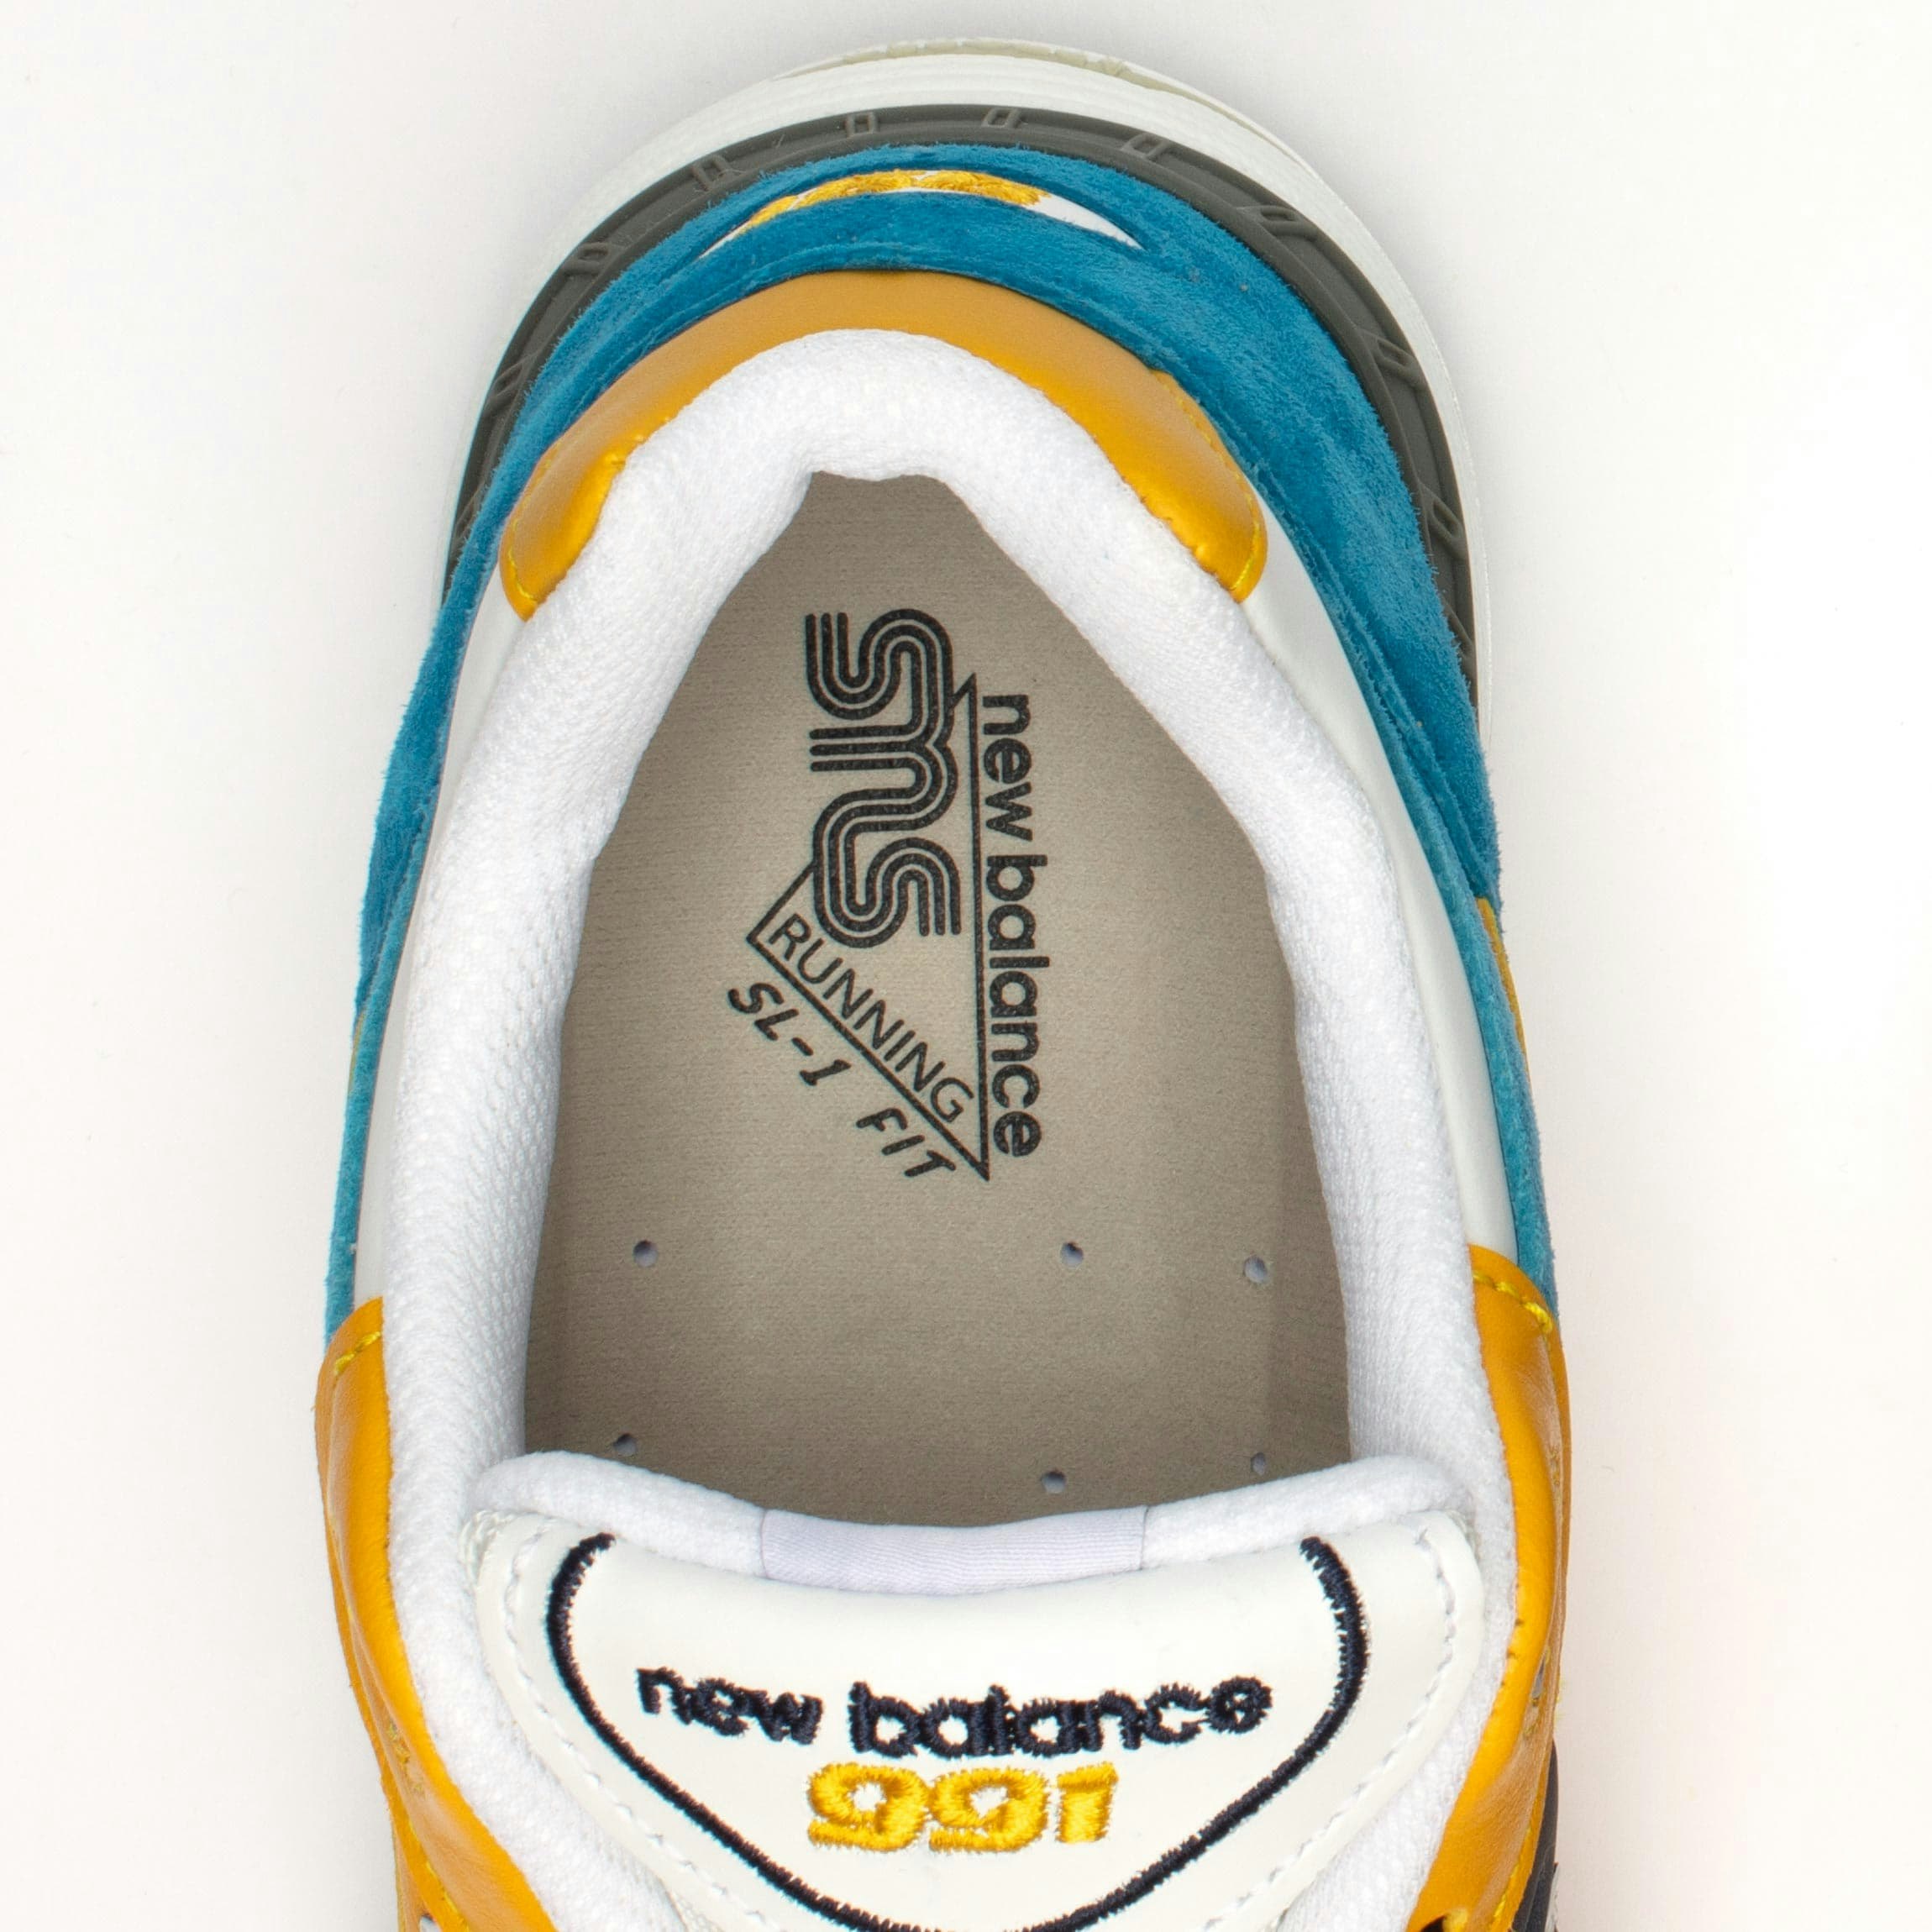 SNS x New Balance 991 "Laser Orange"